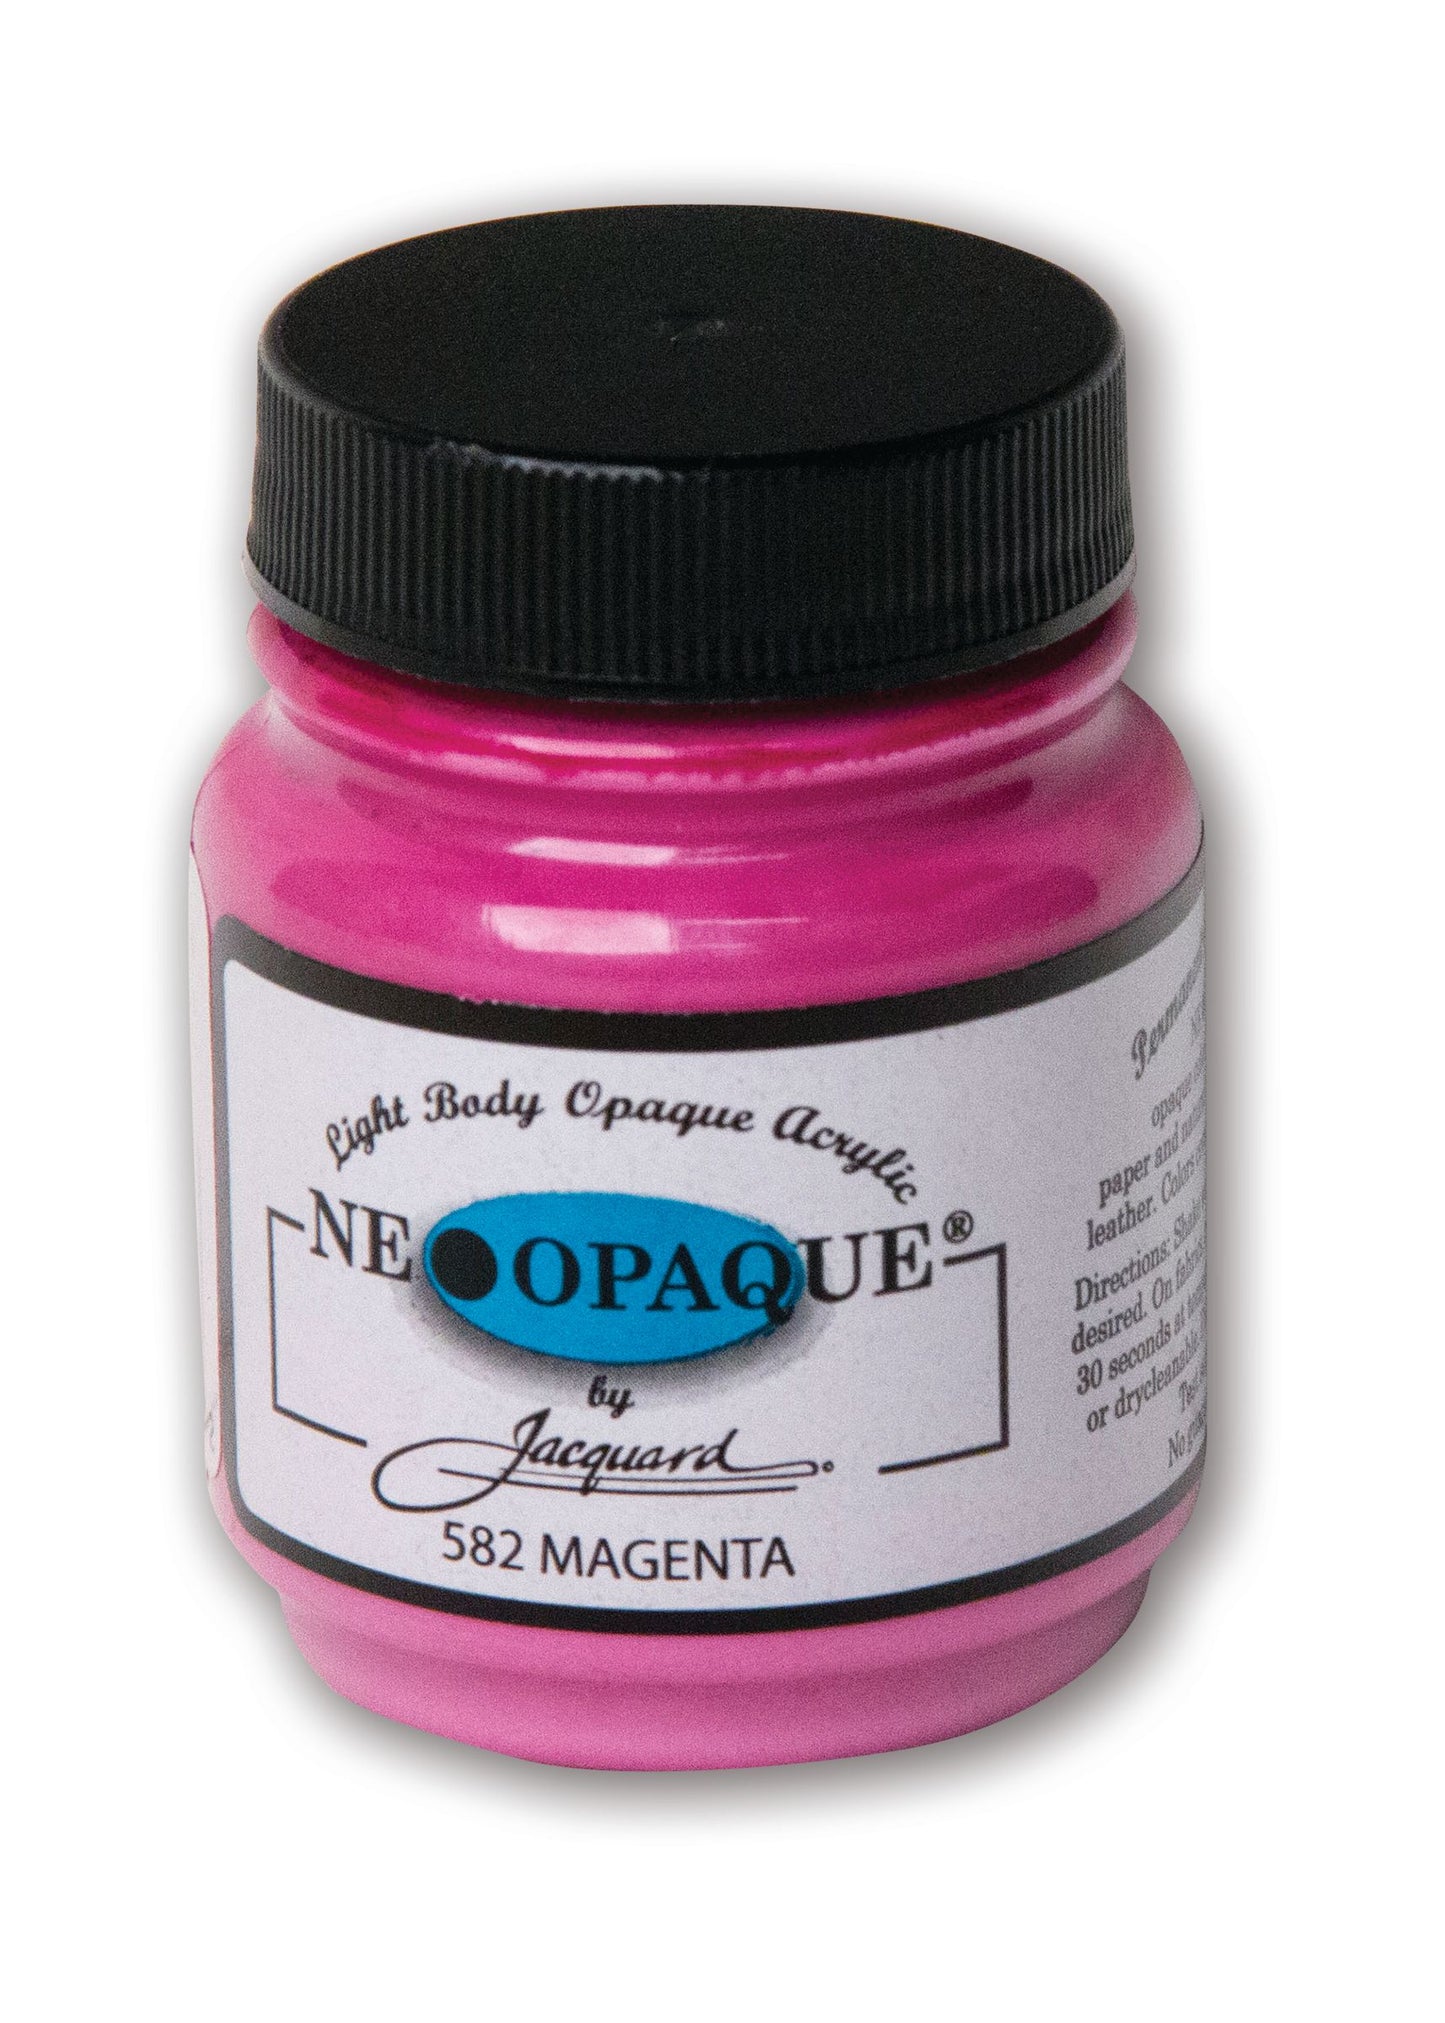 JACQUARD Neopaque Acrylic